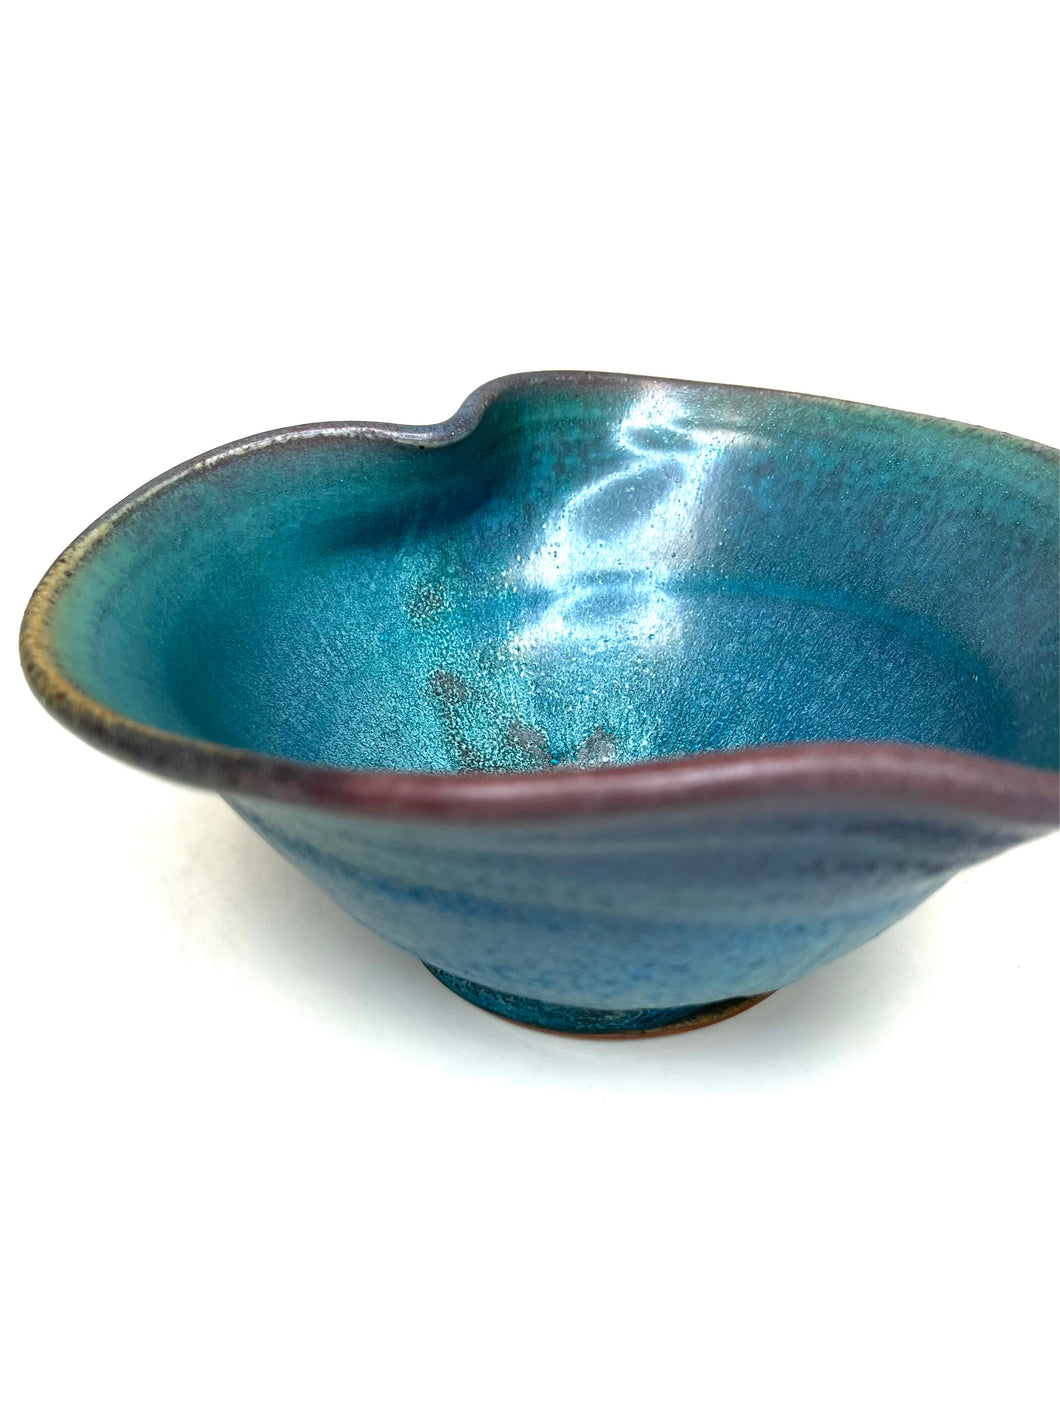 Heart Bowl - Turquoise #1 by Jennifer Johnson